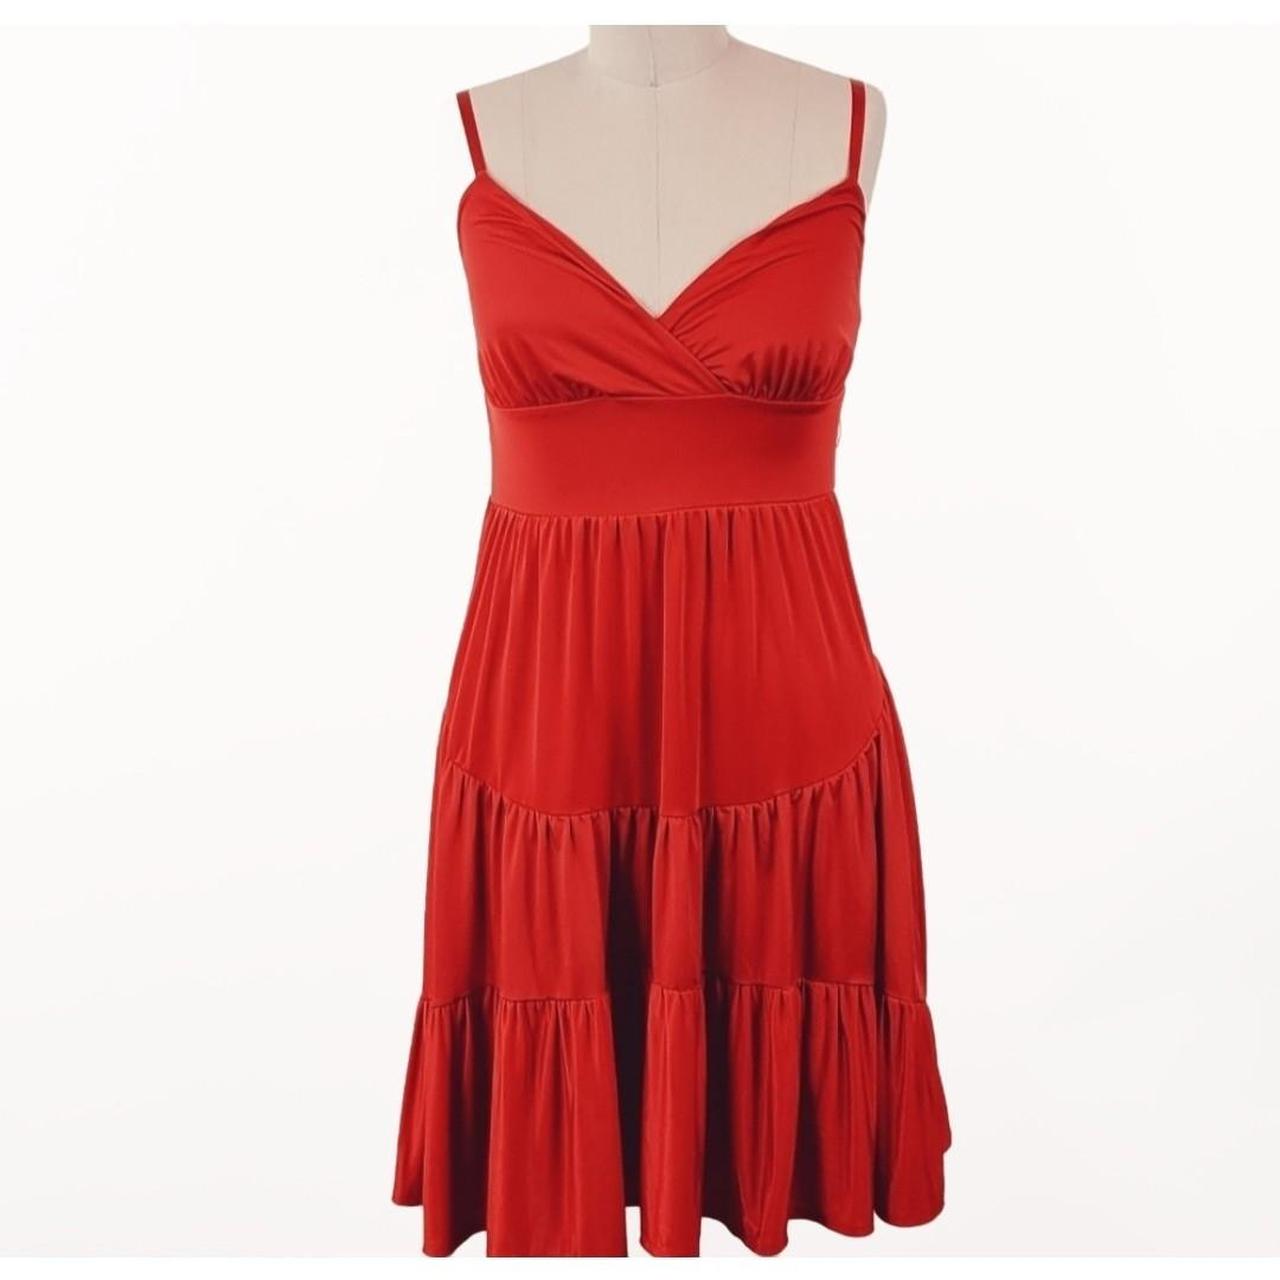 Susie Rose Women's Red Dress